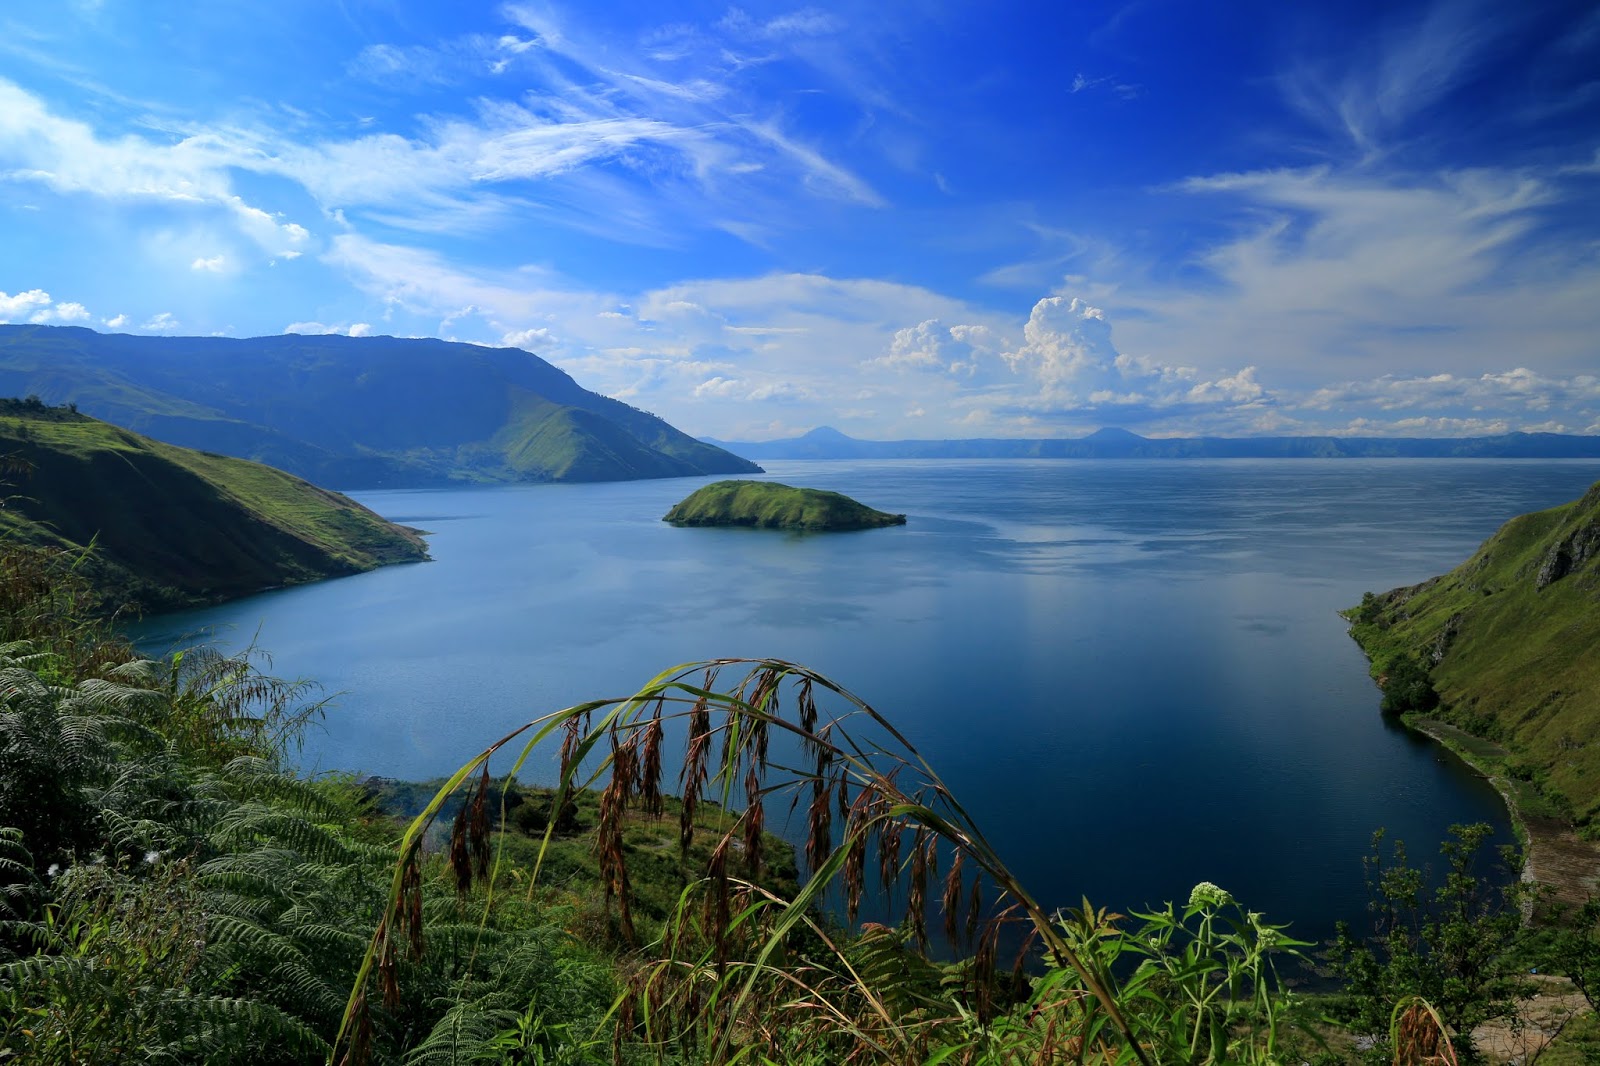 Indonesia's supervolcano Toba designated UNESCO Global Geopark